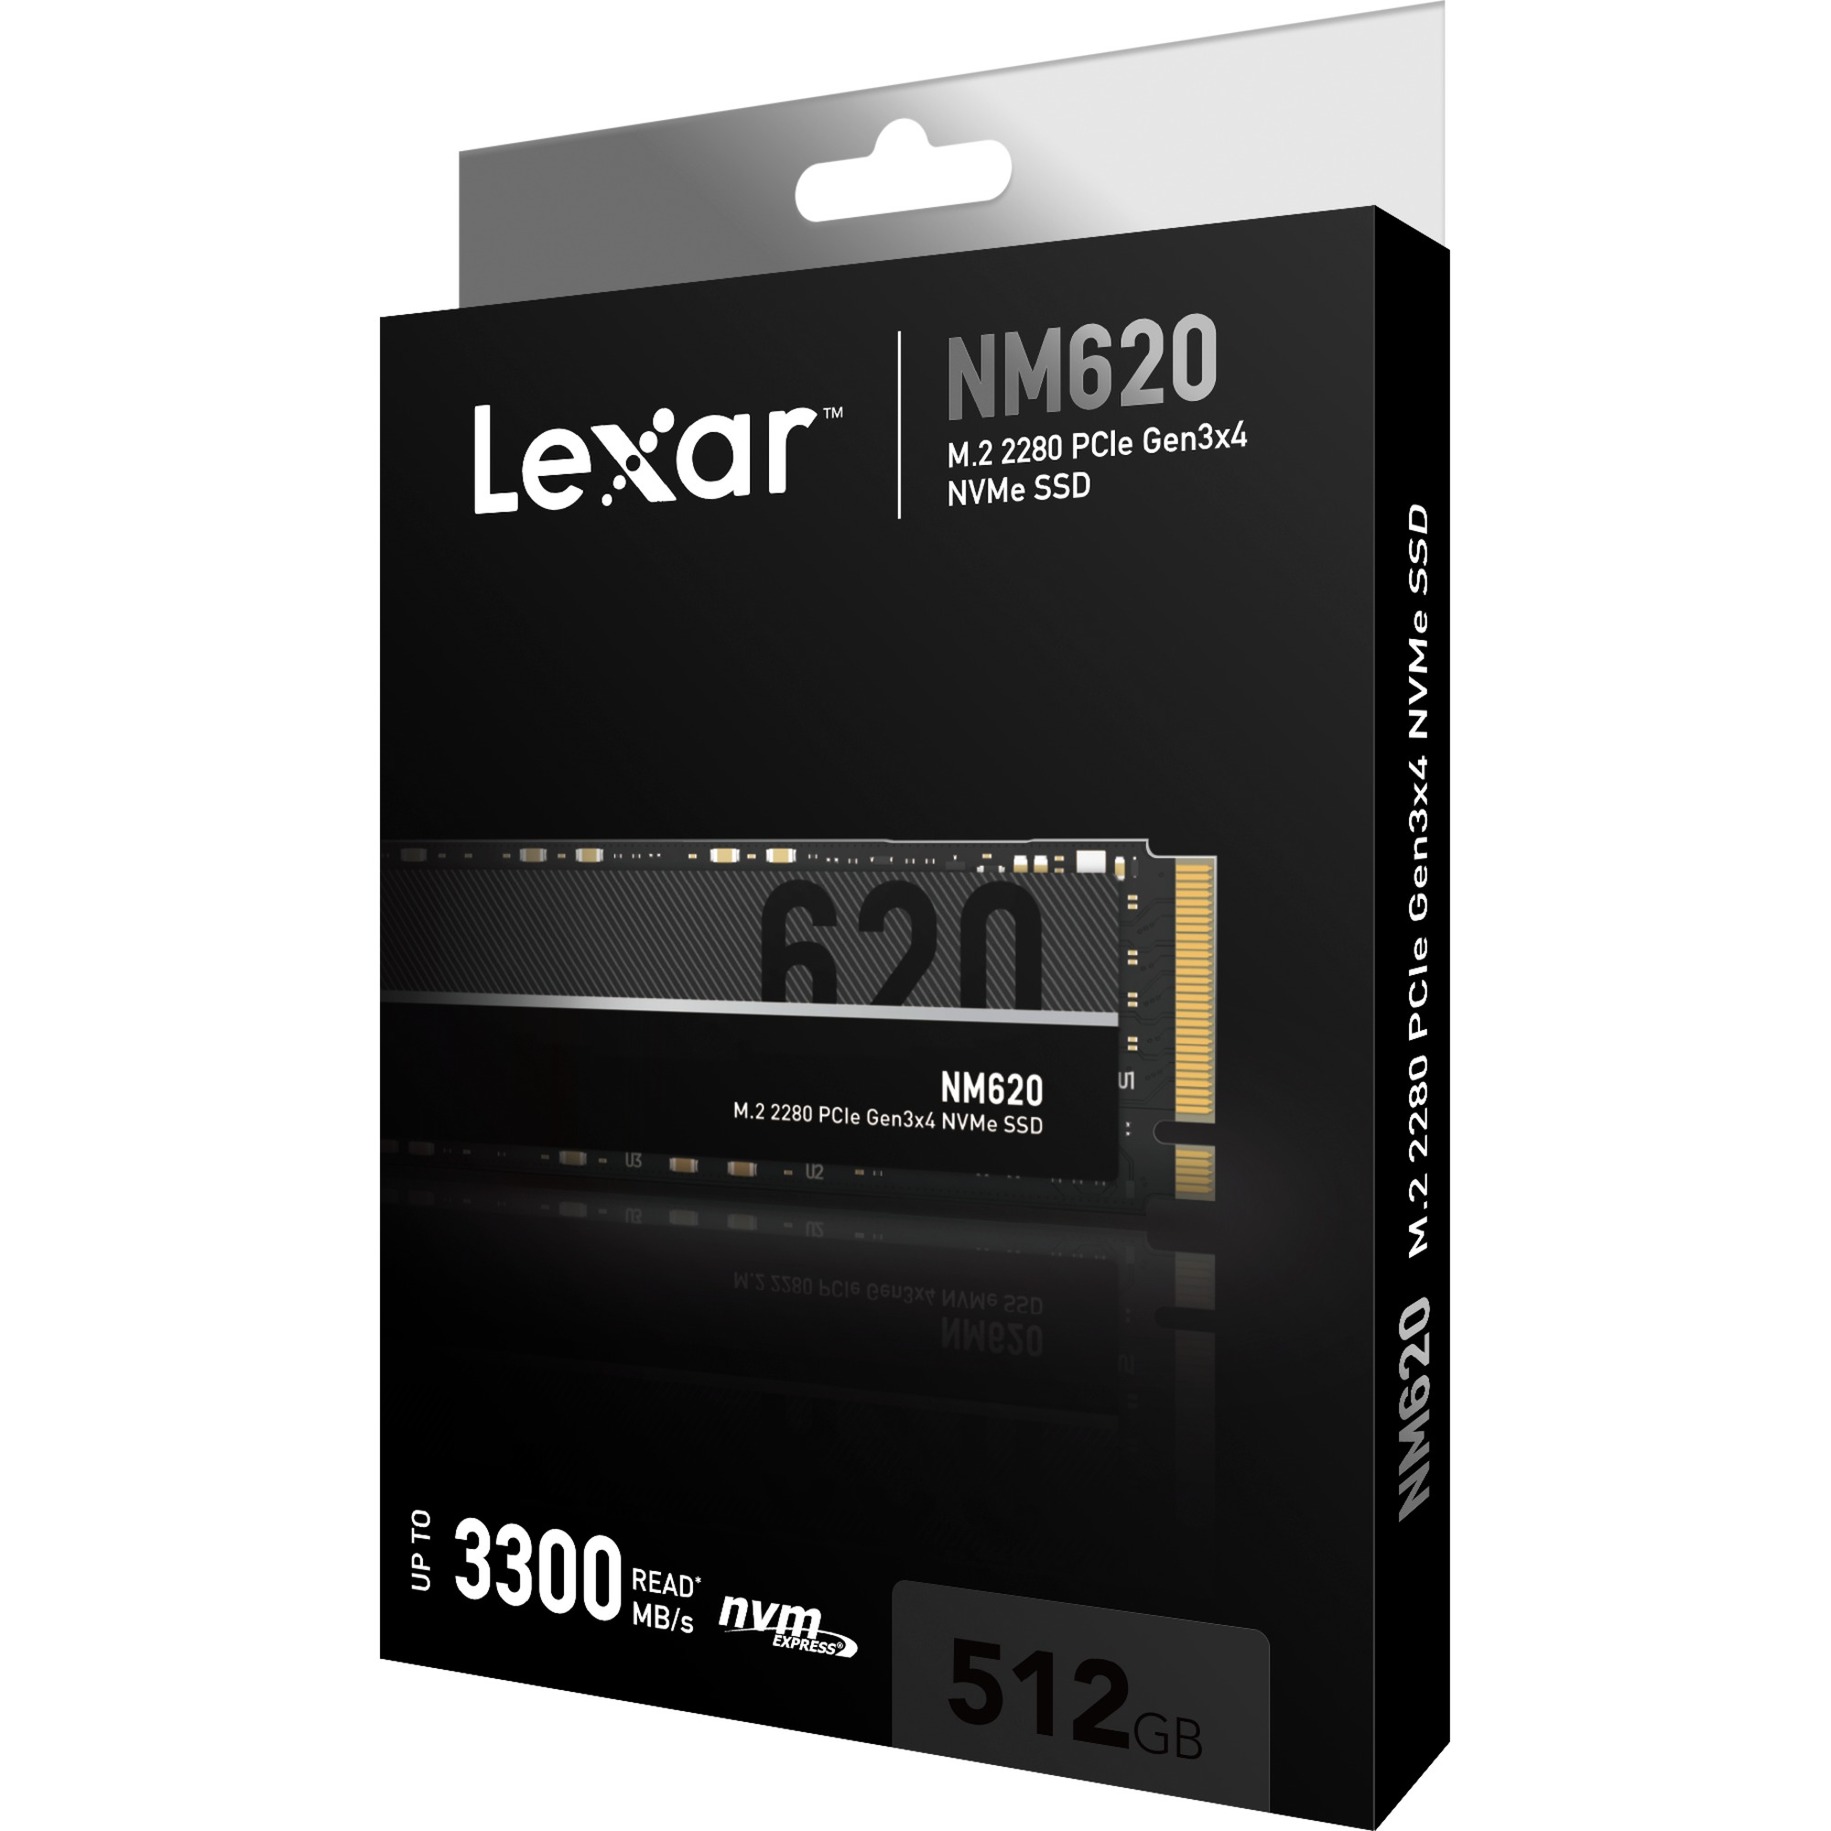 Lexar NM620 1TB SSD